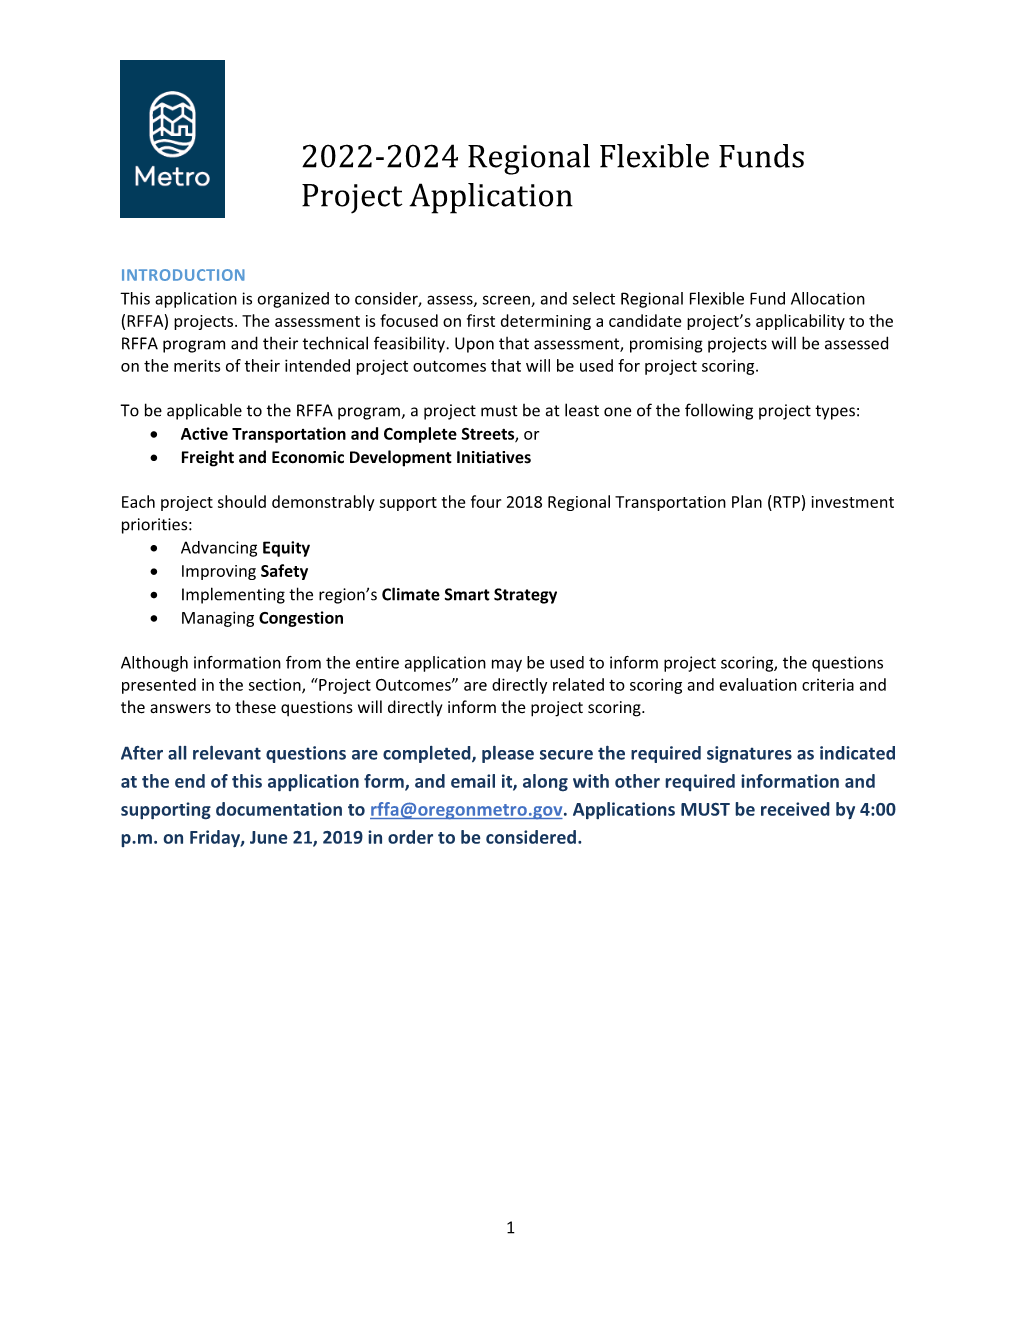 2022-2024 Regional Flexible Funds Project Application